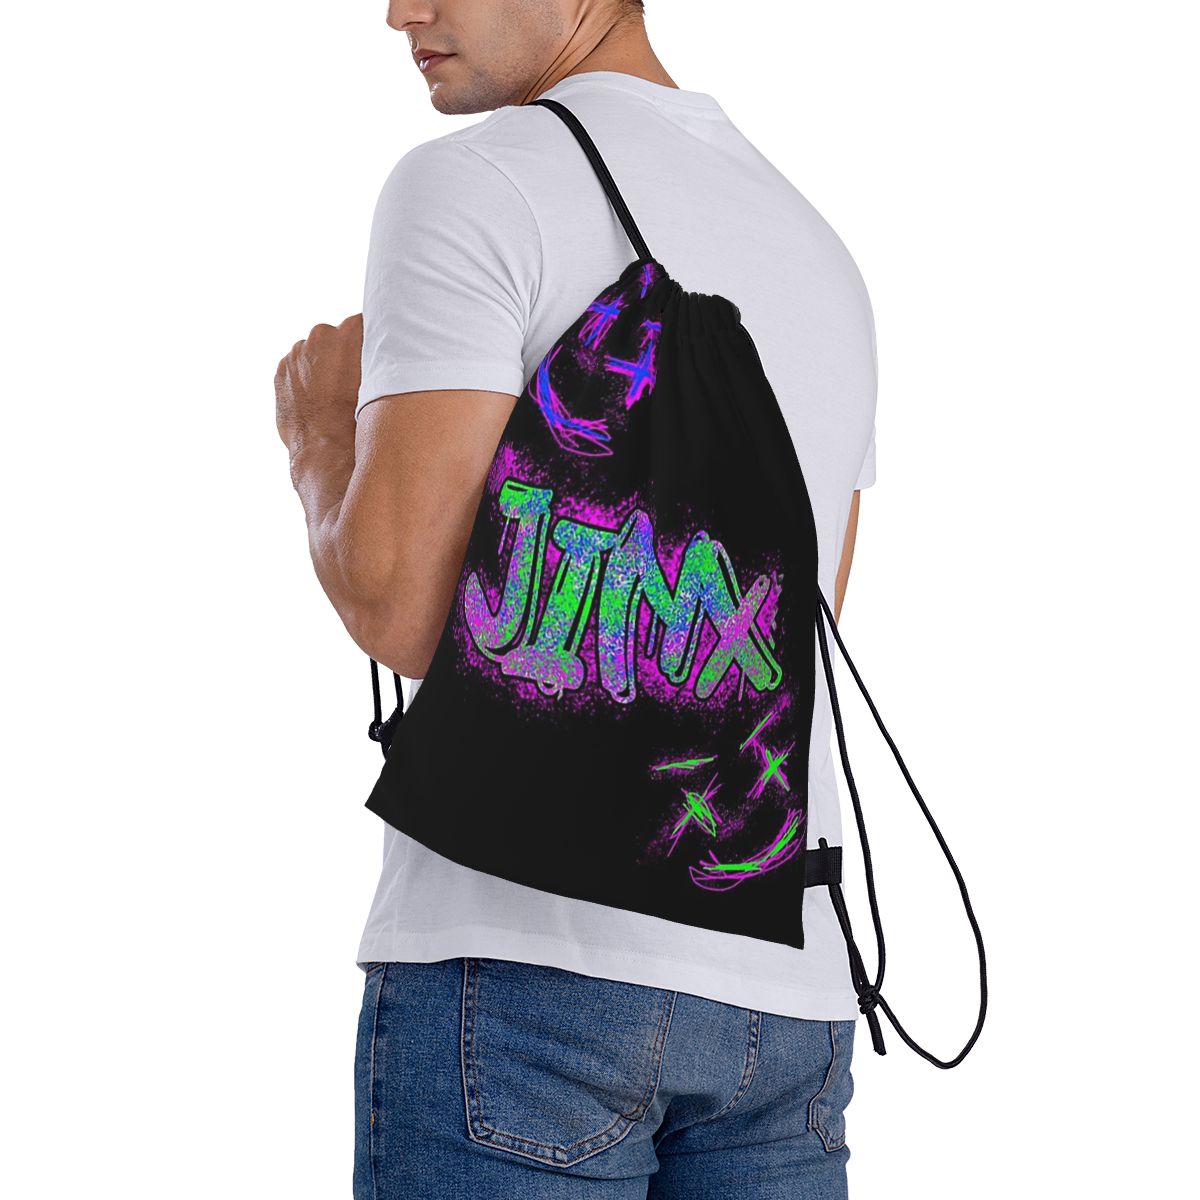 Jinx Name Backpack - League of Legends Fan Store